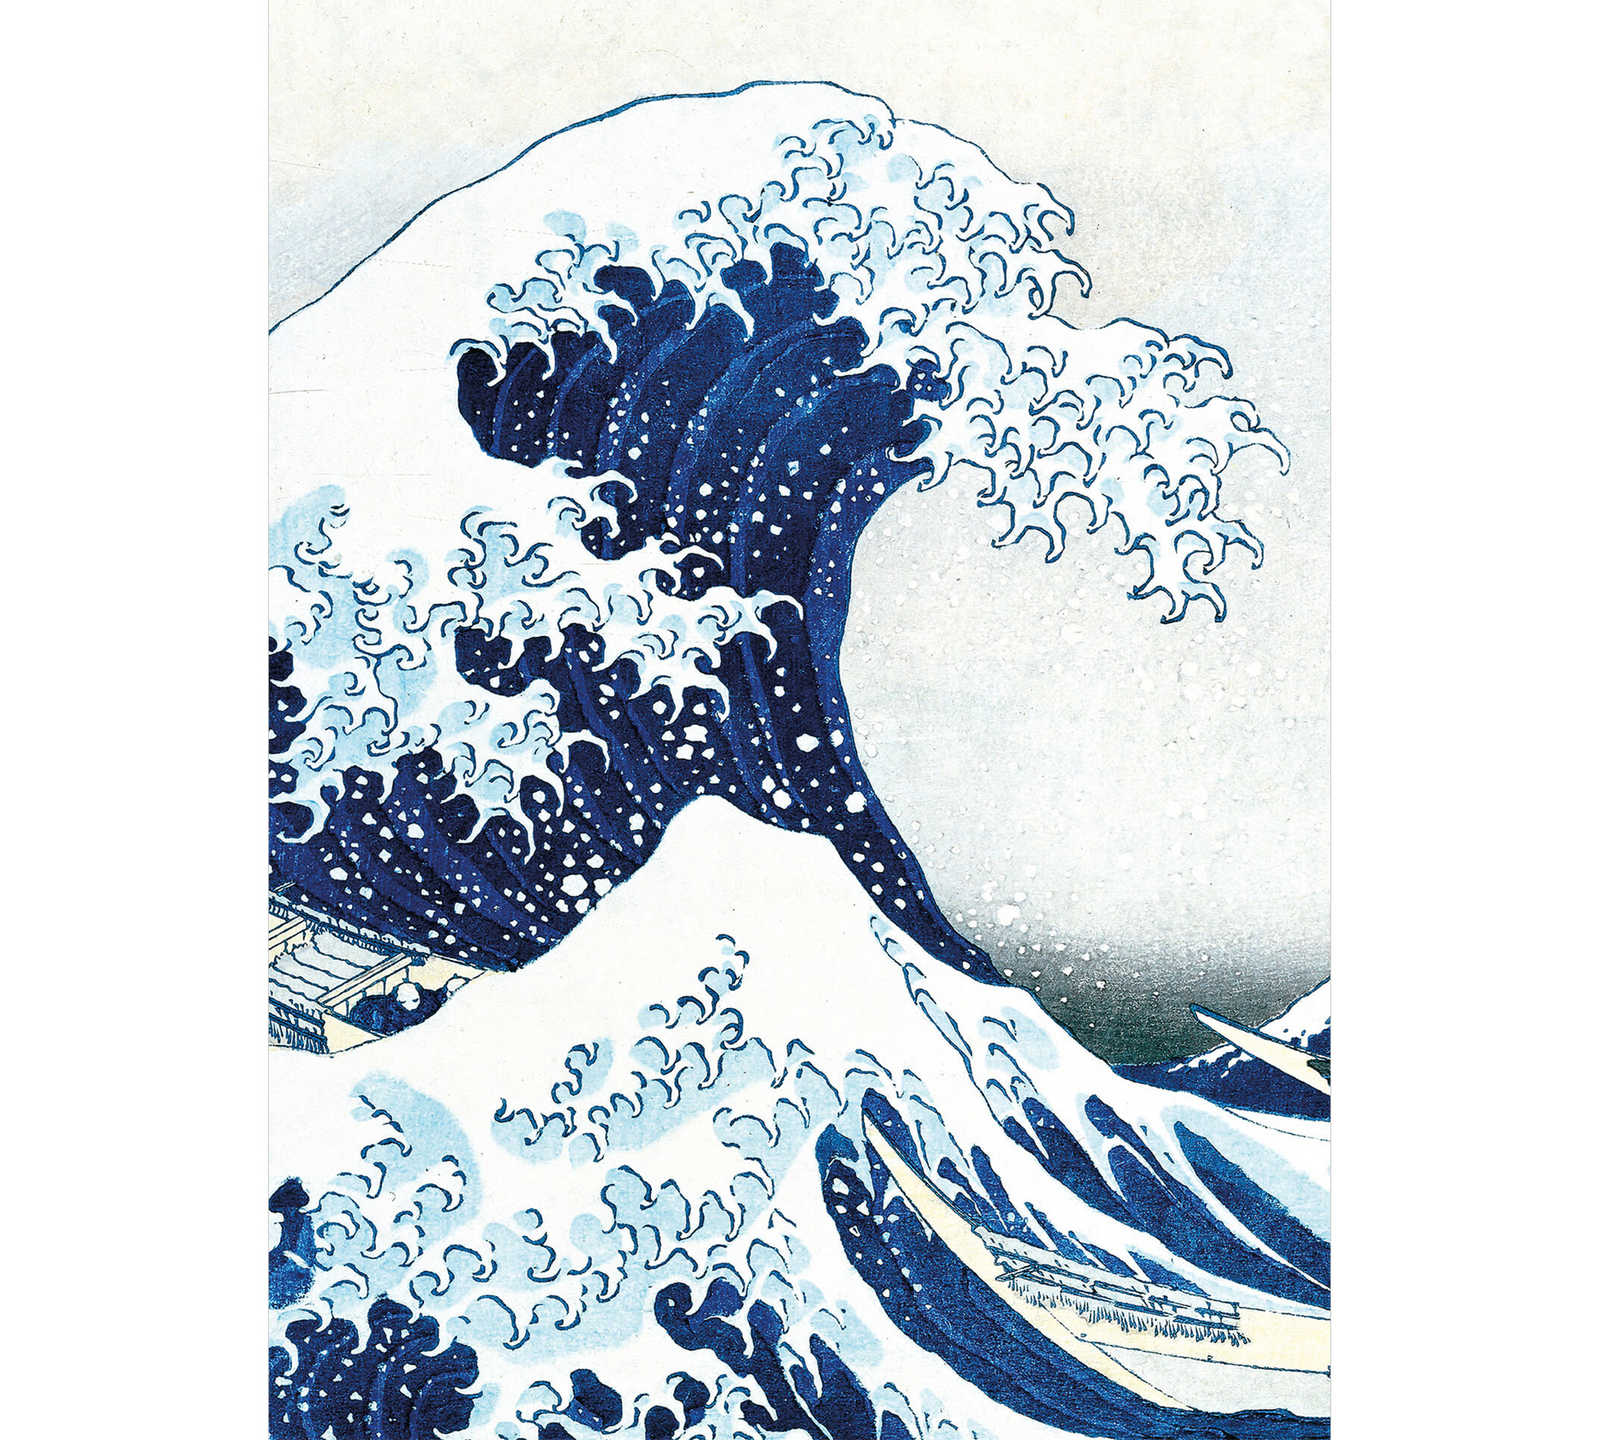         Photo wallpaper narrow wave drawn in blue - Blue, White
    